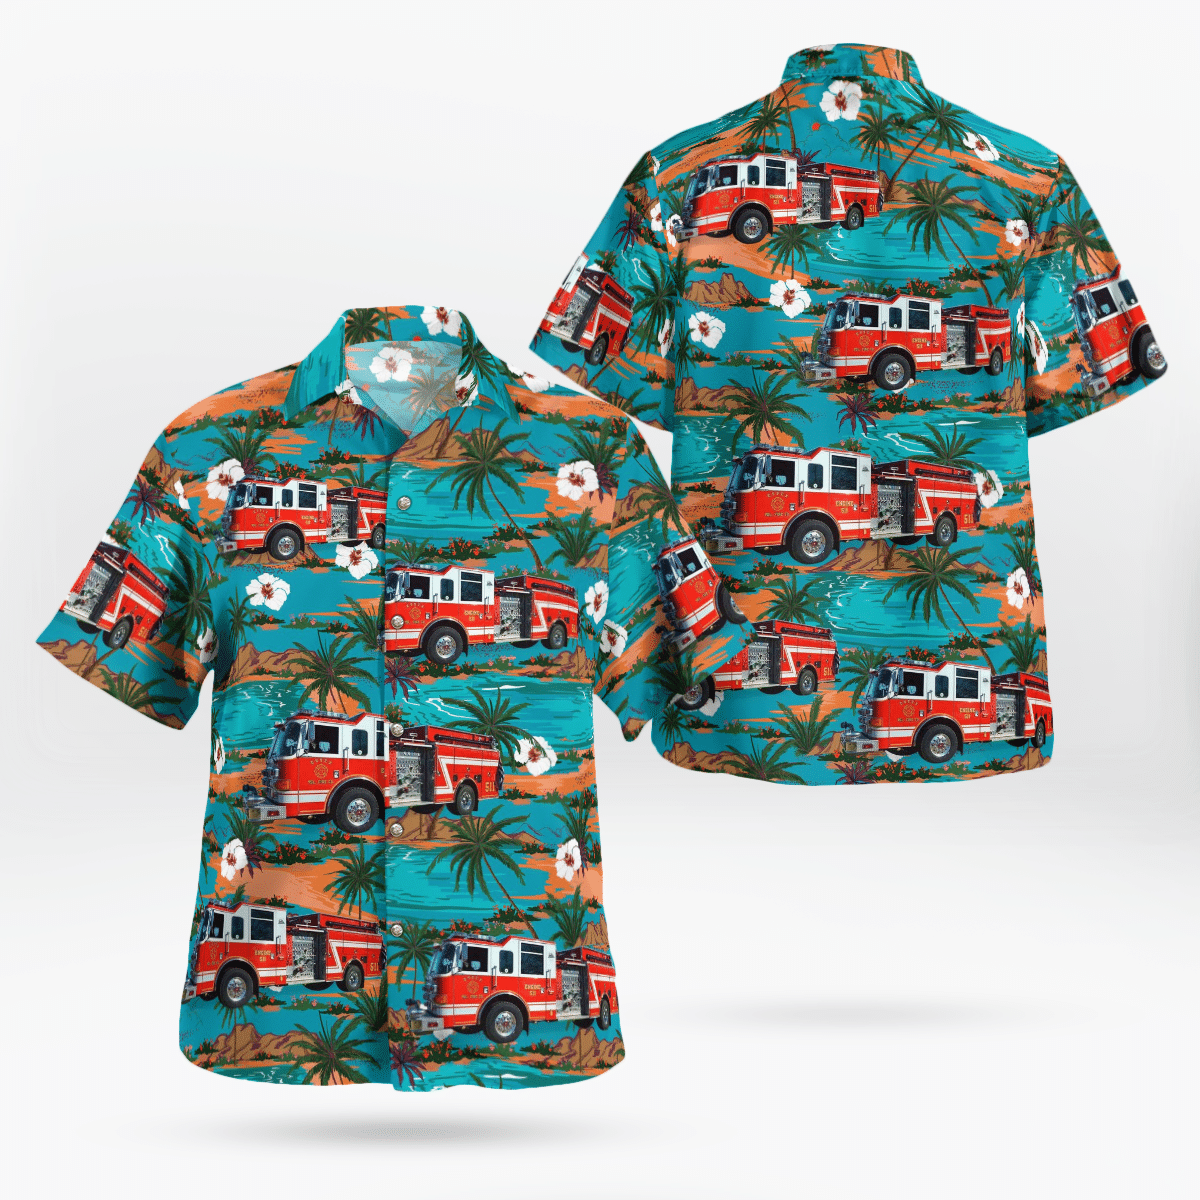 Listed below are some High-quality Aloha Shirt 189